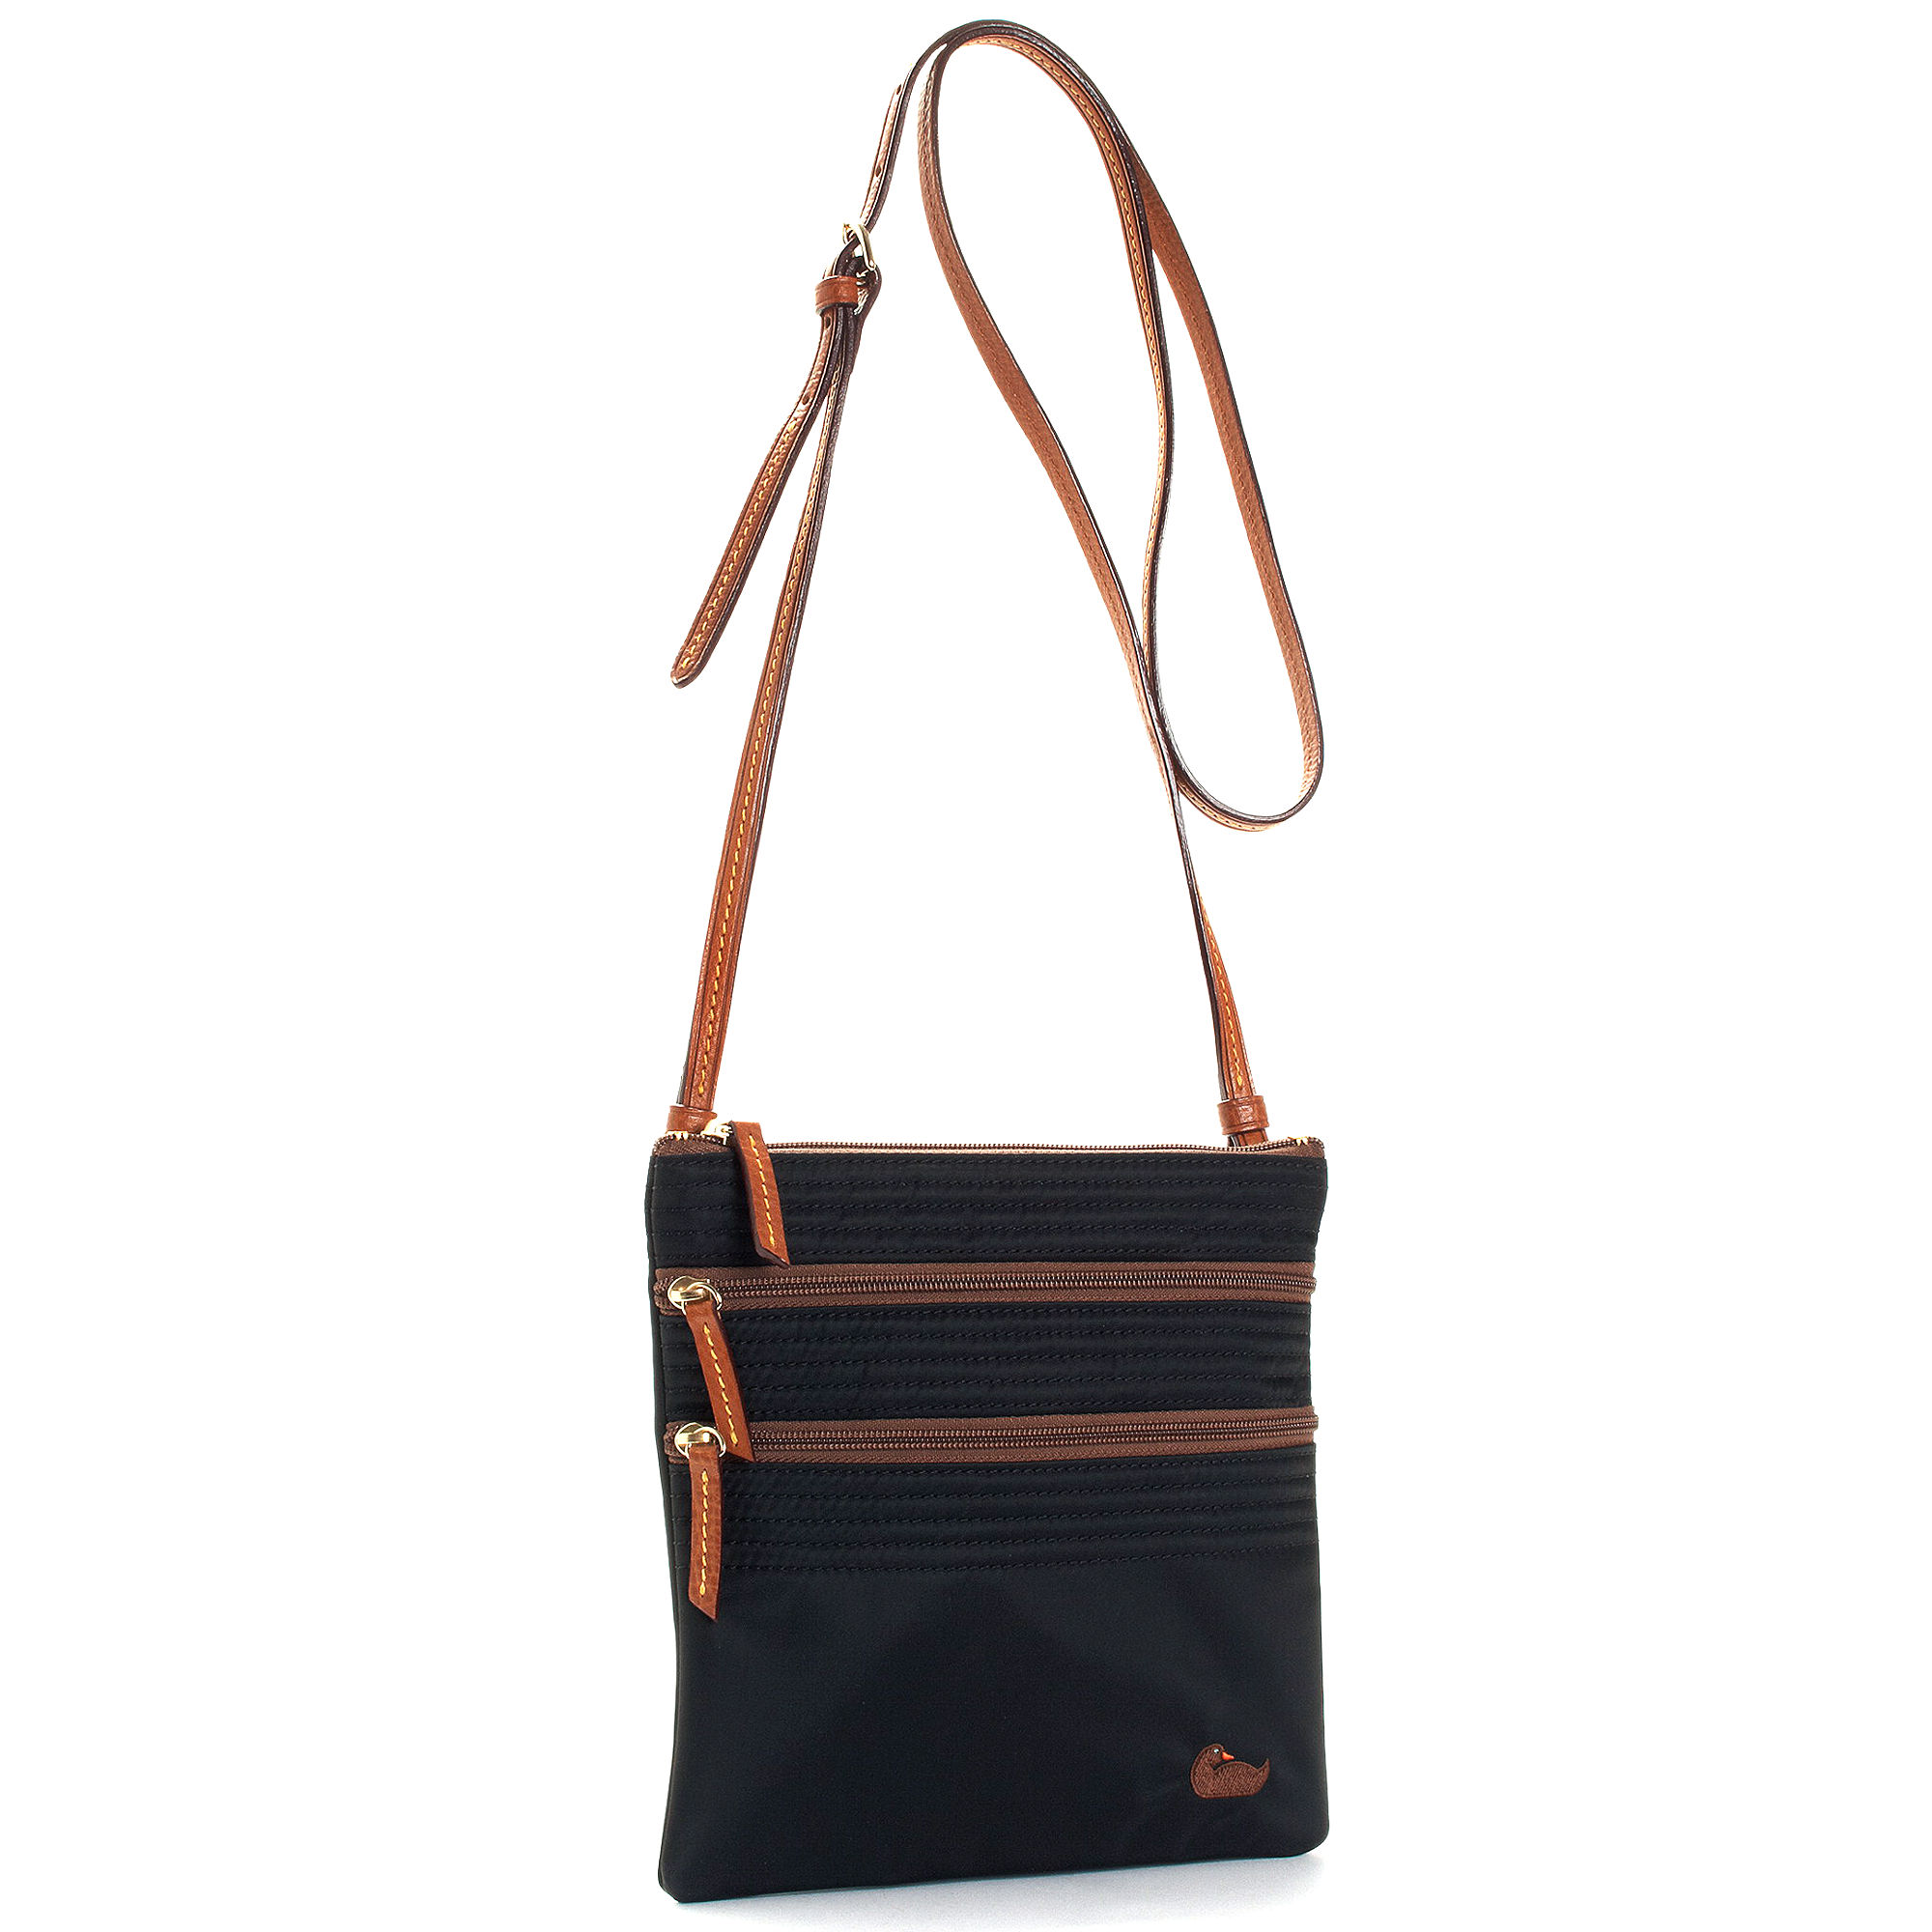 Dooney & Bourke Nylon Triple Zip Crossbody Bag in Black - Lyst